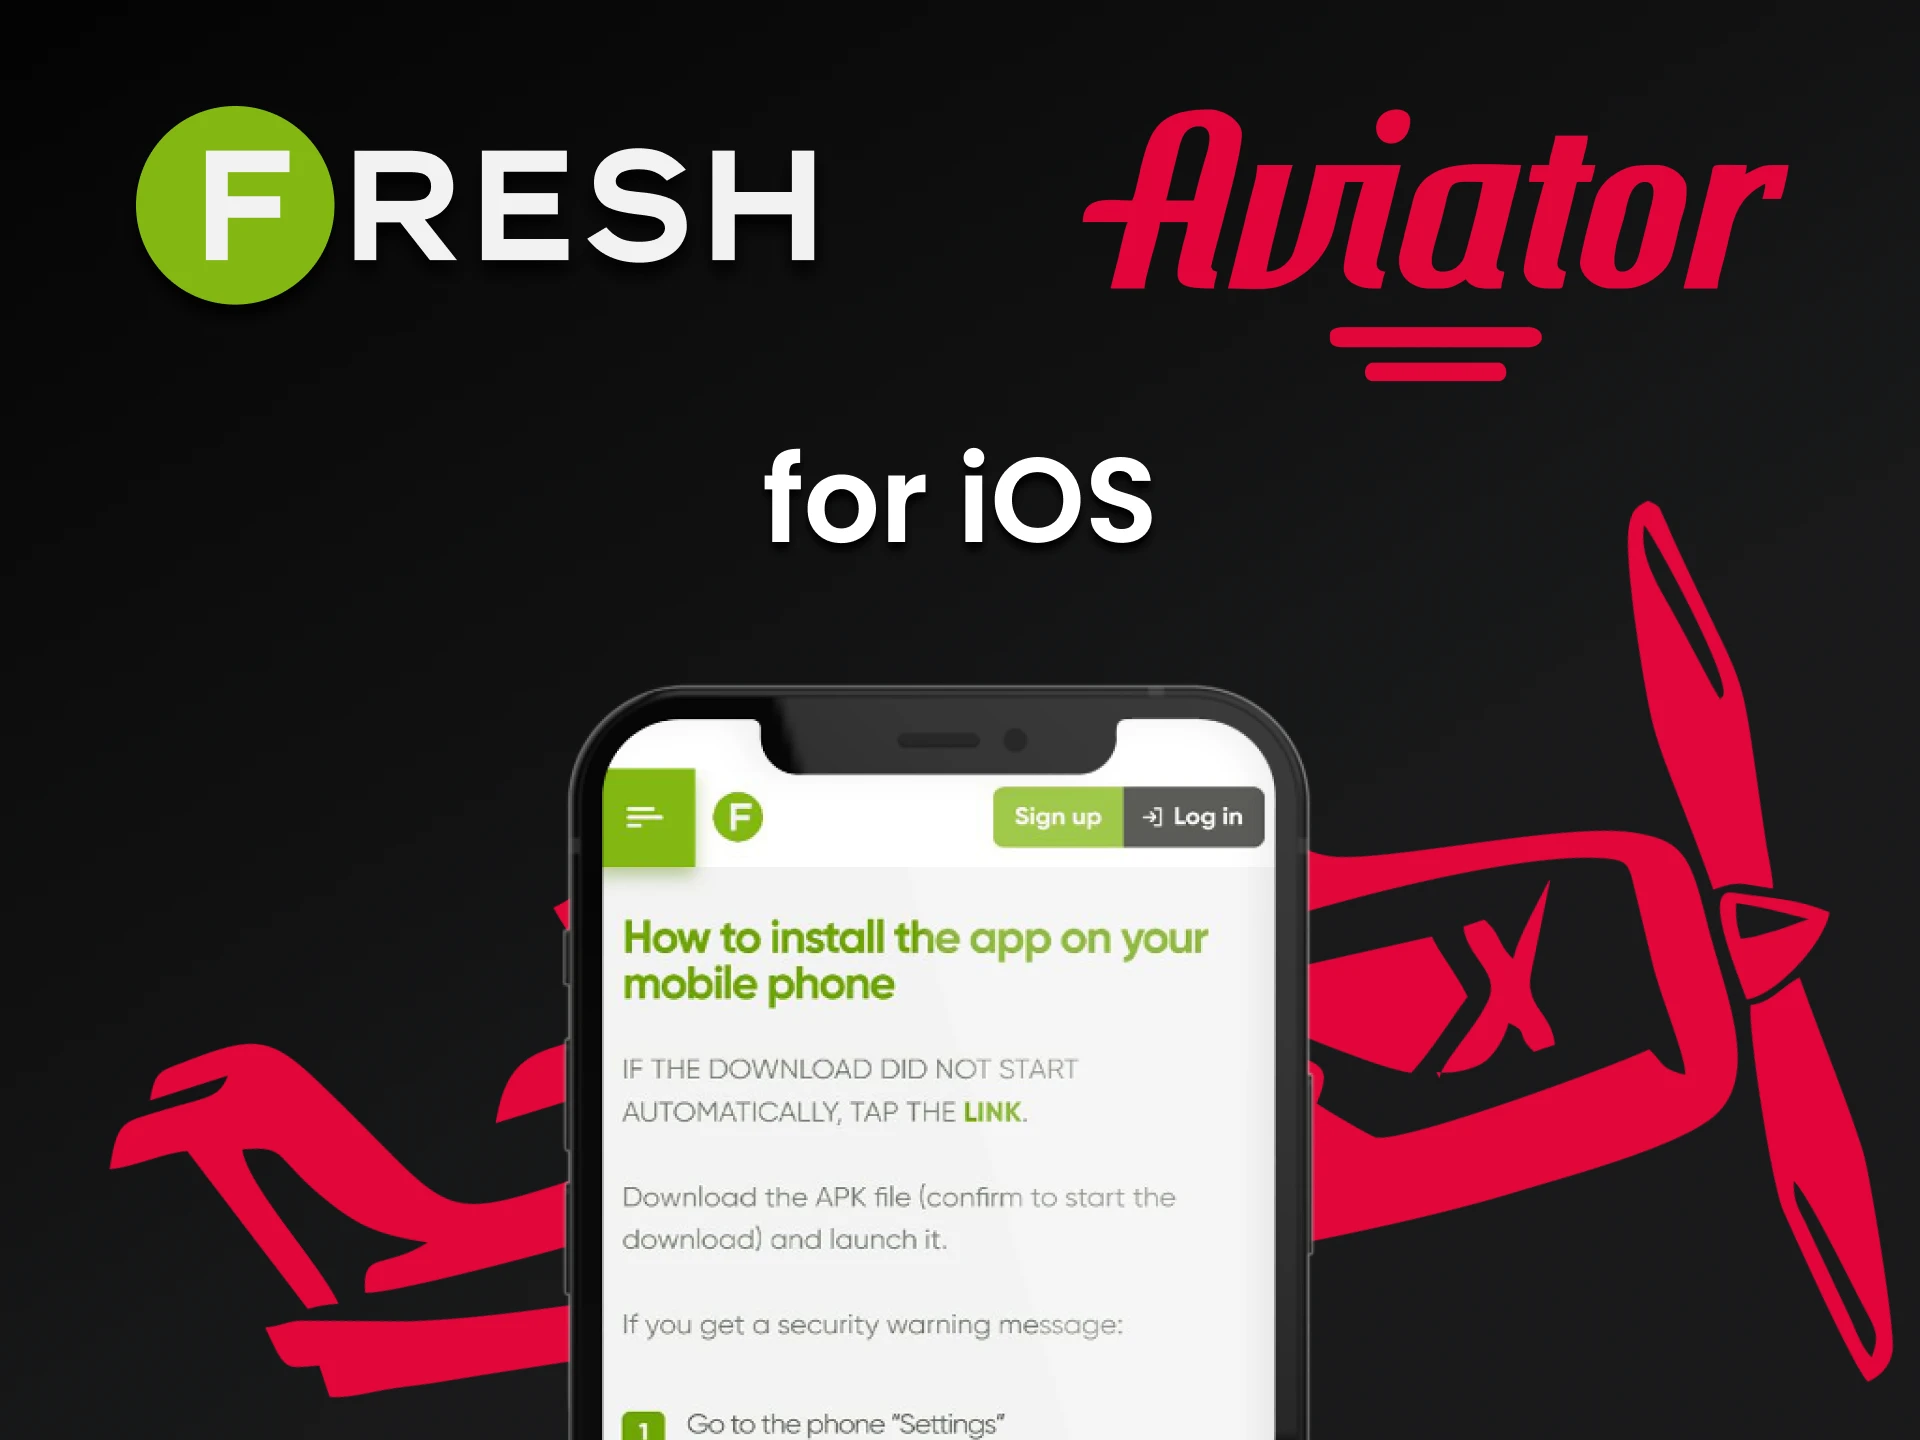 Play Aviator on the Fresh Casino iOS app.